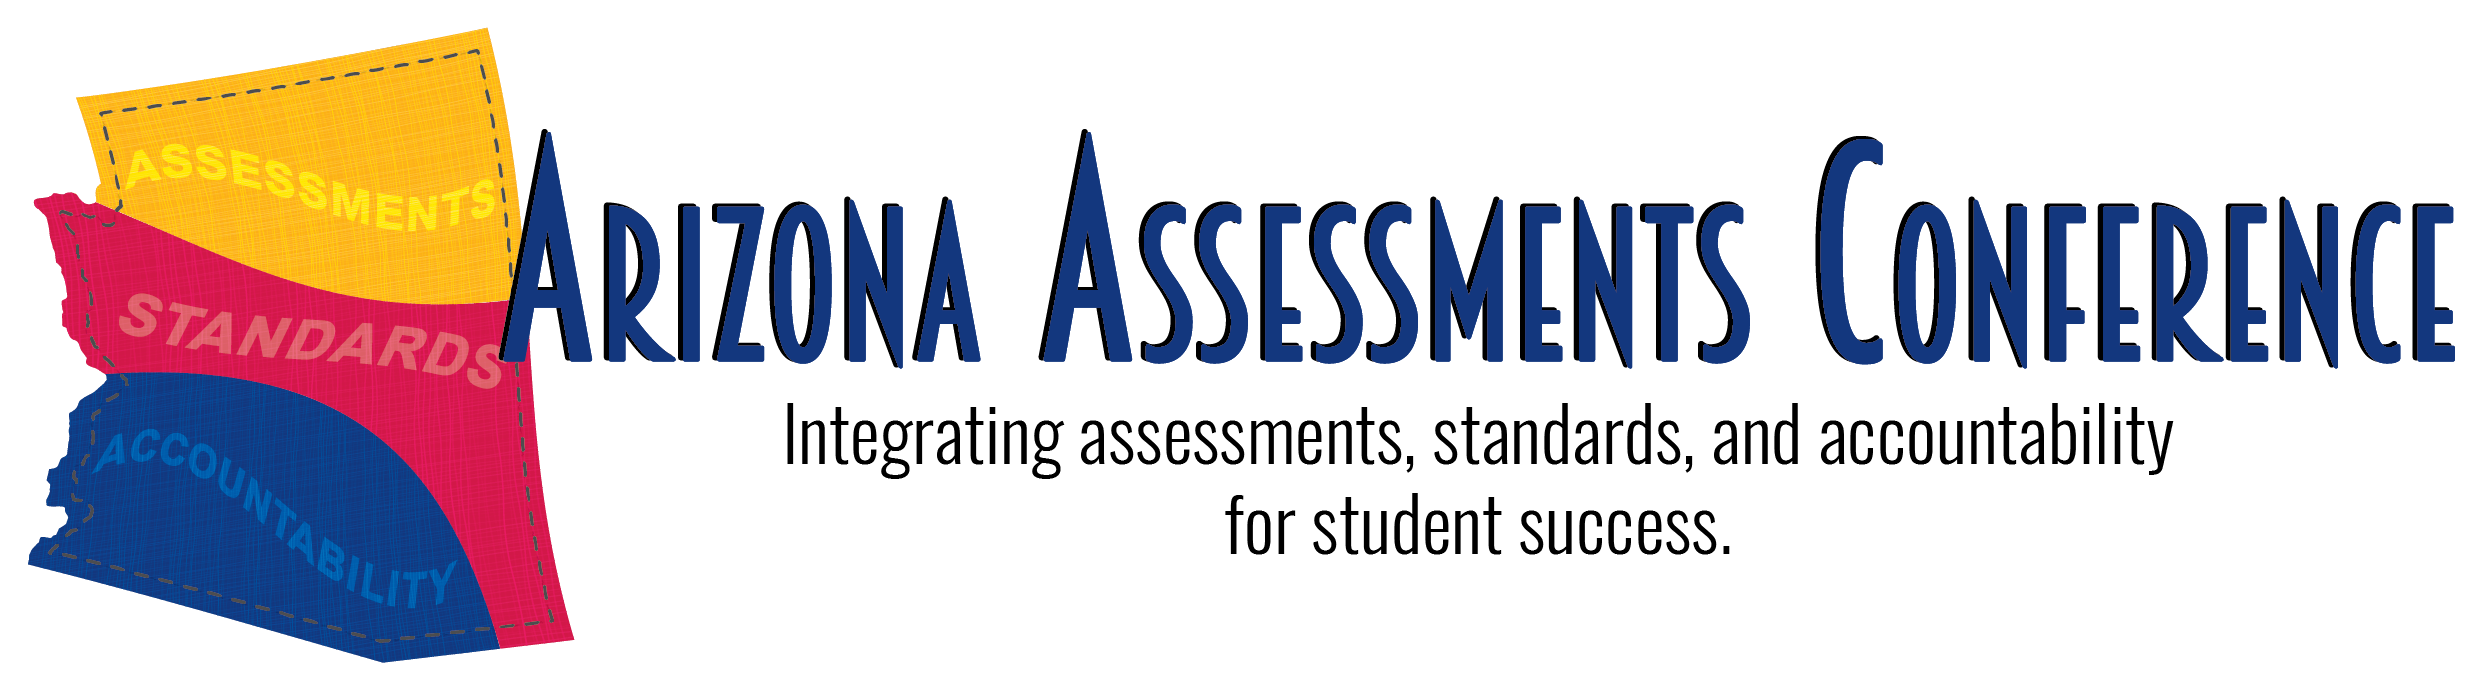 Assessment Conference Logo